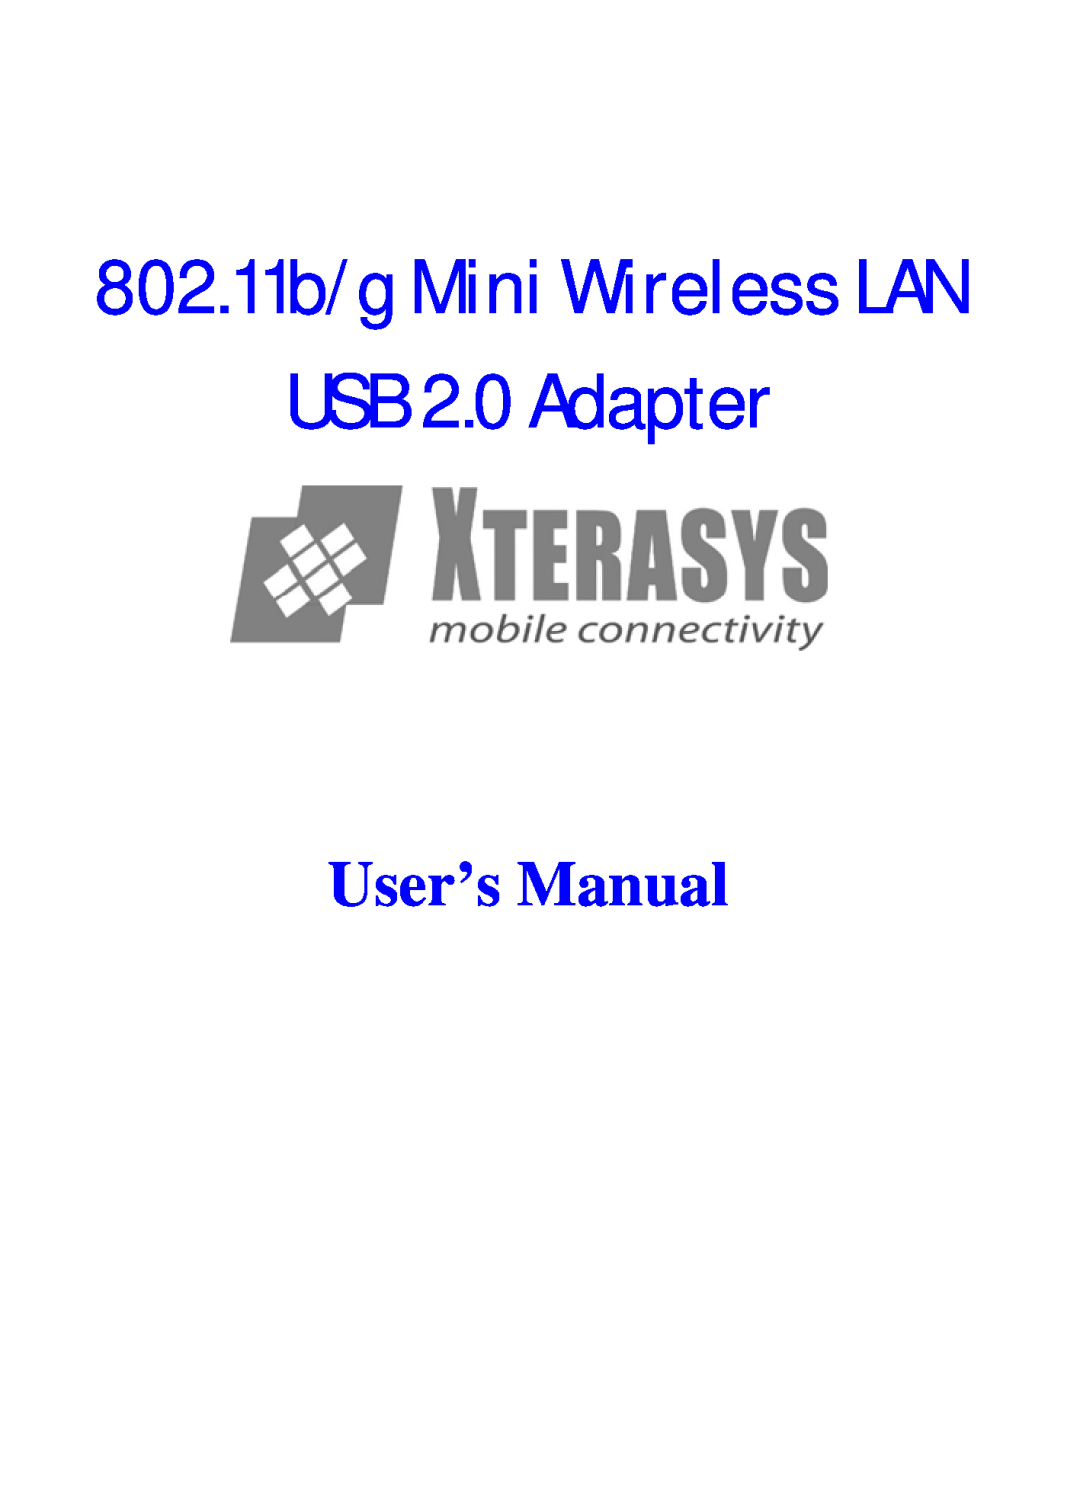 Xterasys USB Adapter user manual 802.11b/g Mini Wireless LAN USB 2.0 Adapter, User’s Manual 